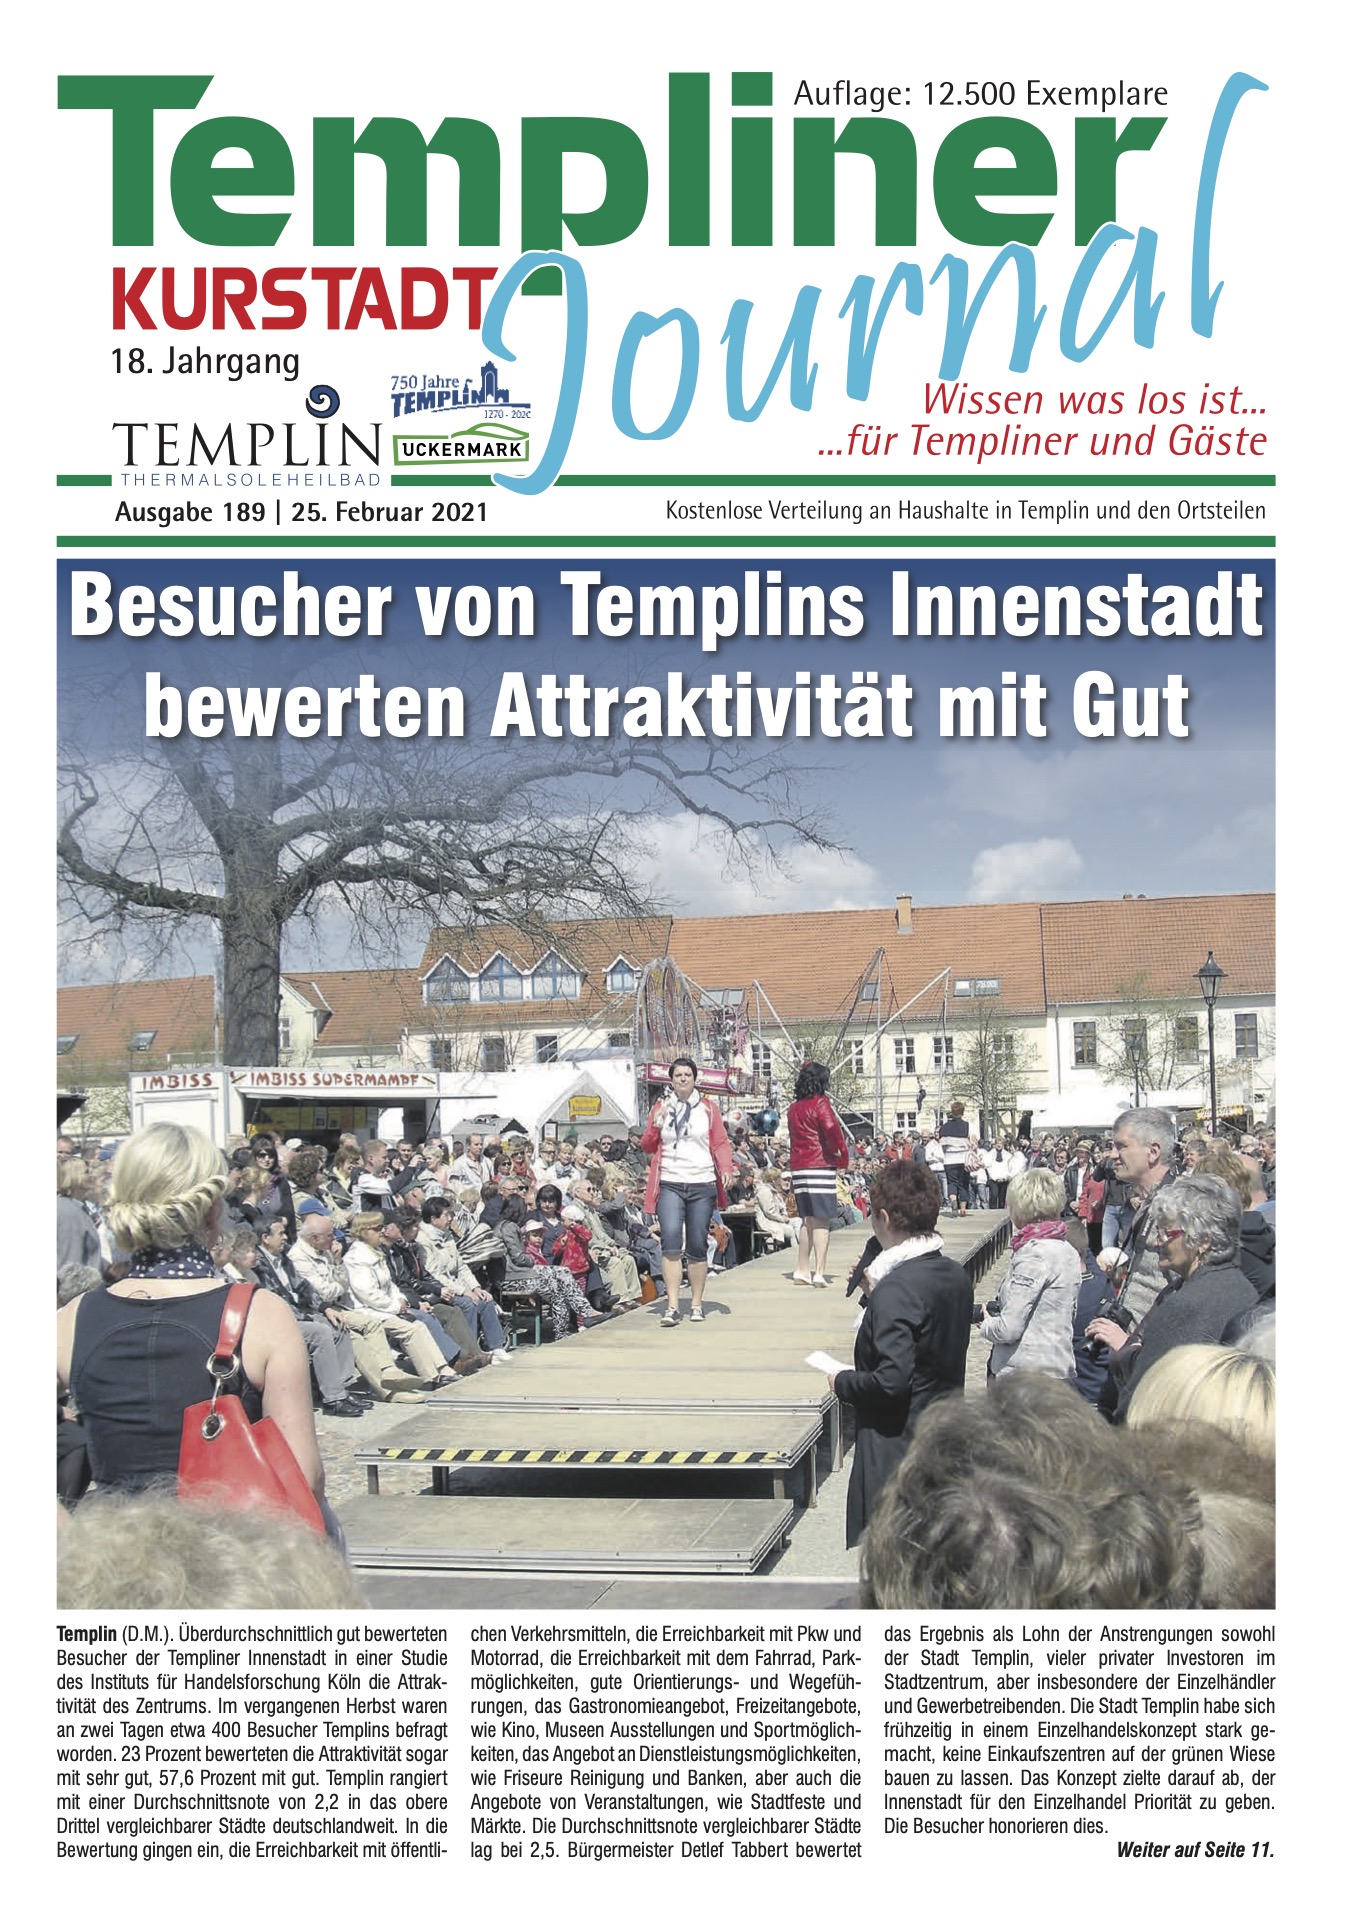 Templiner Kurstadt Journal 189 vom 25.02.2021